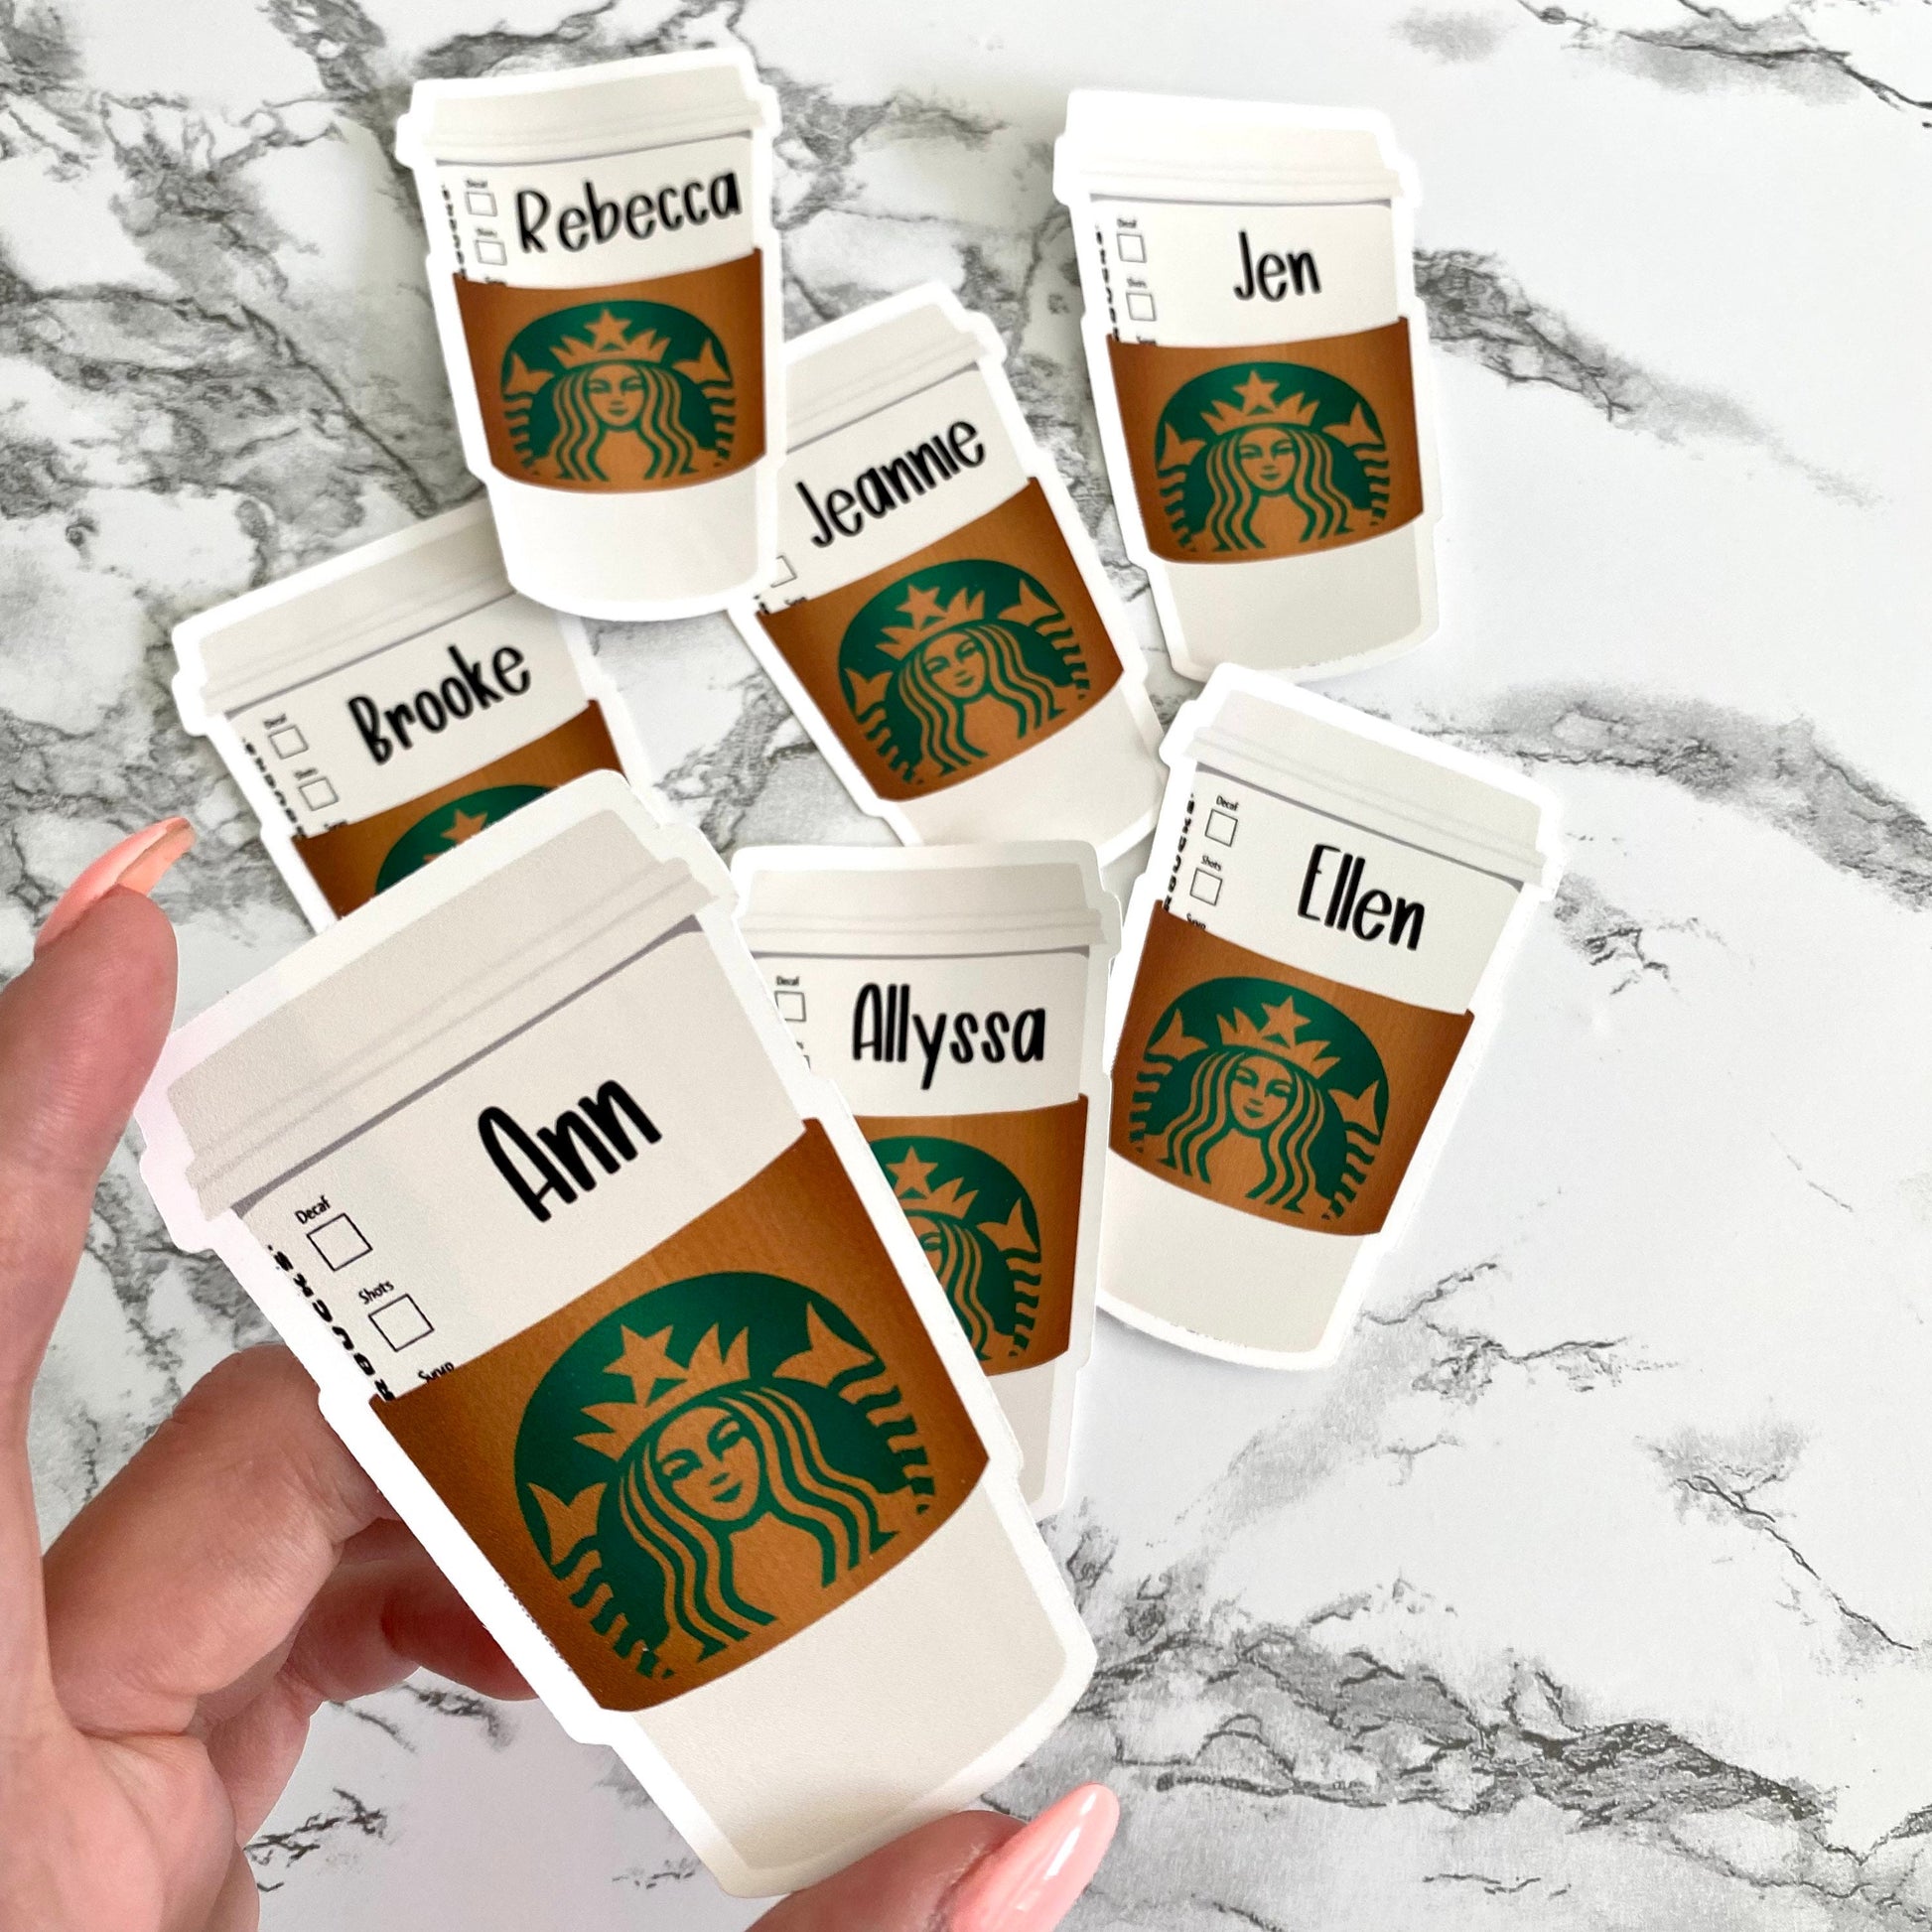 Starbucks Drink Sticker Pack – ABDigitalStudio